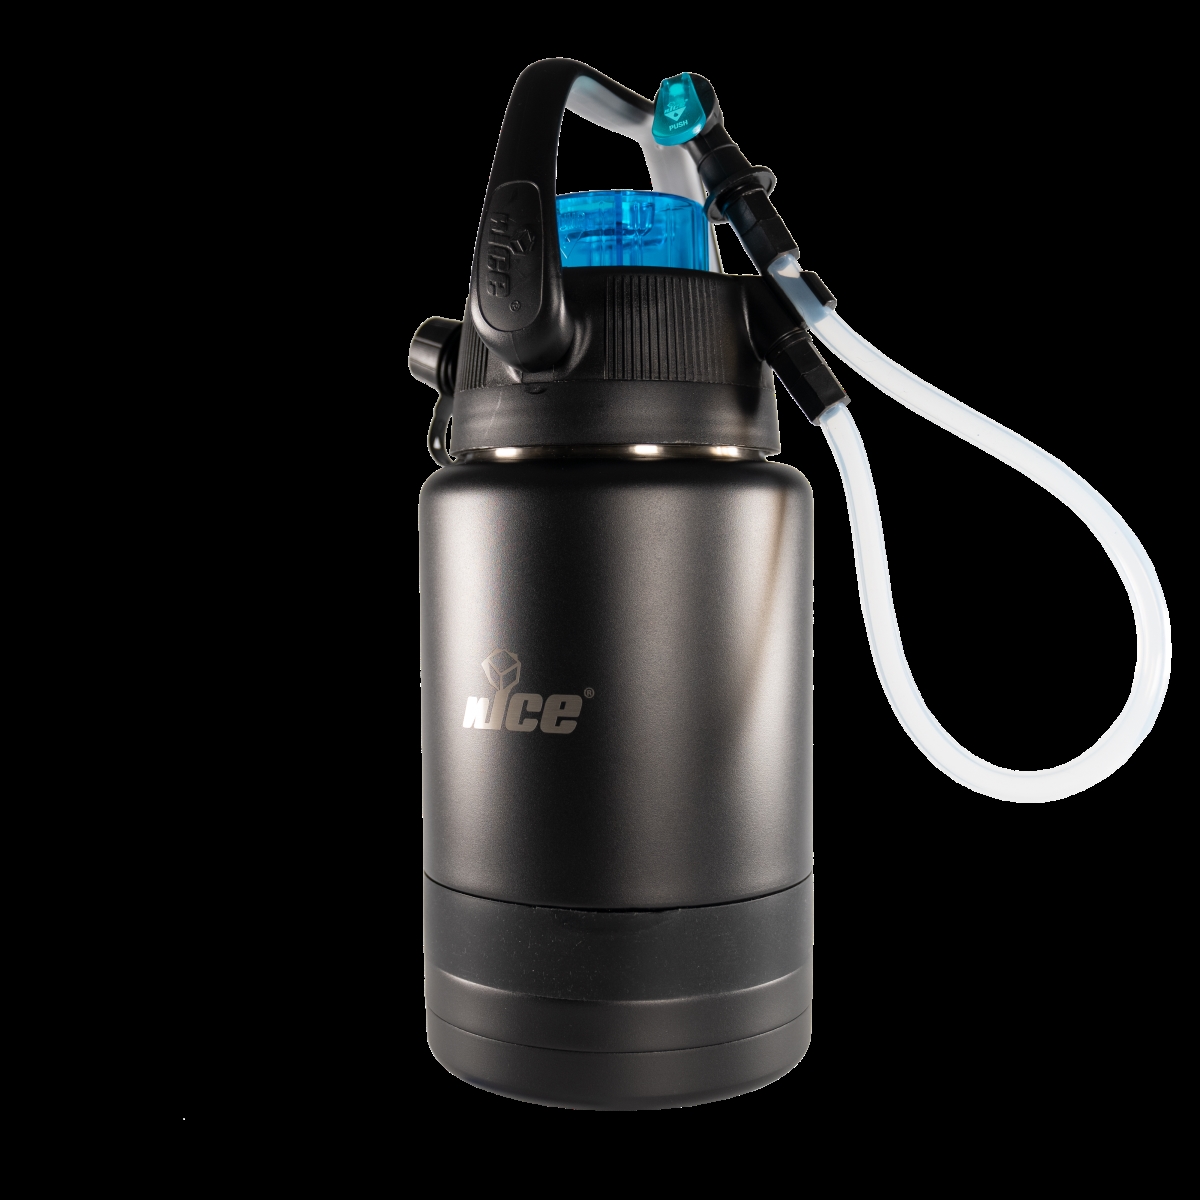 Tpf-520462 1 Gal Pump 2 Pour Insulated Jug With Hose & Spout - Black